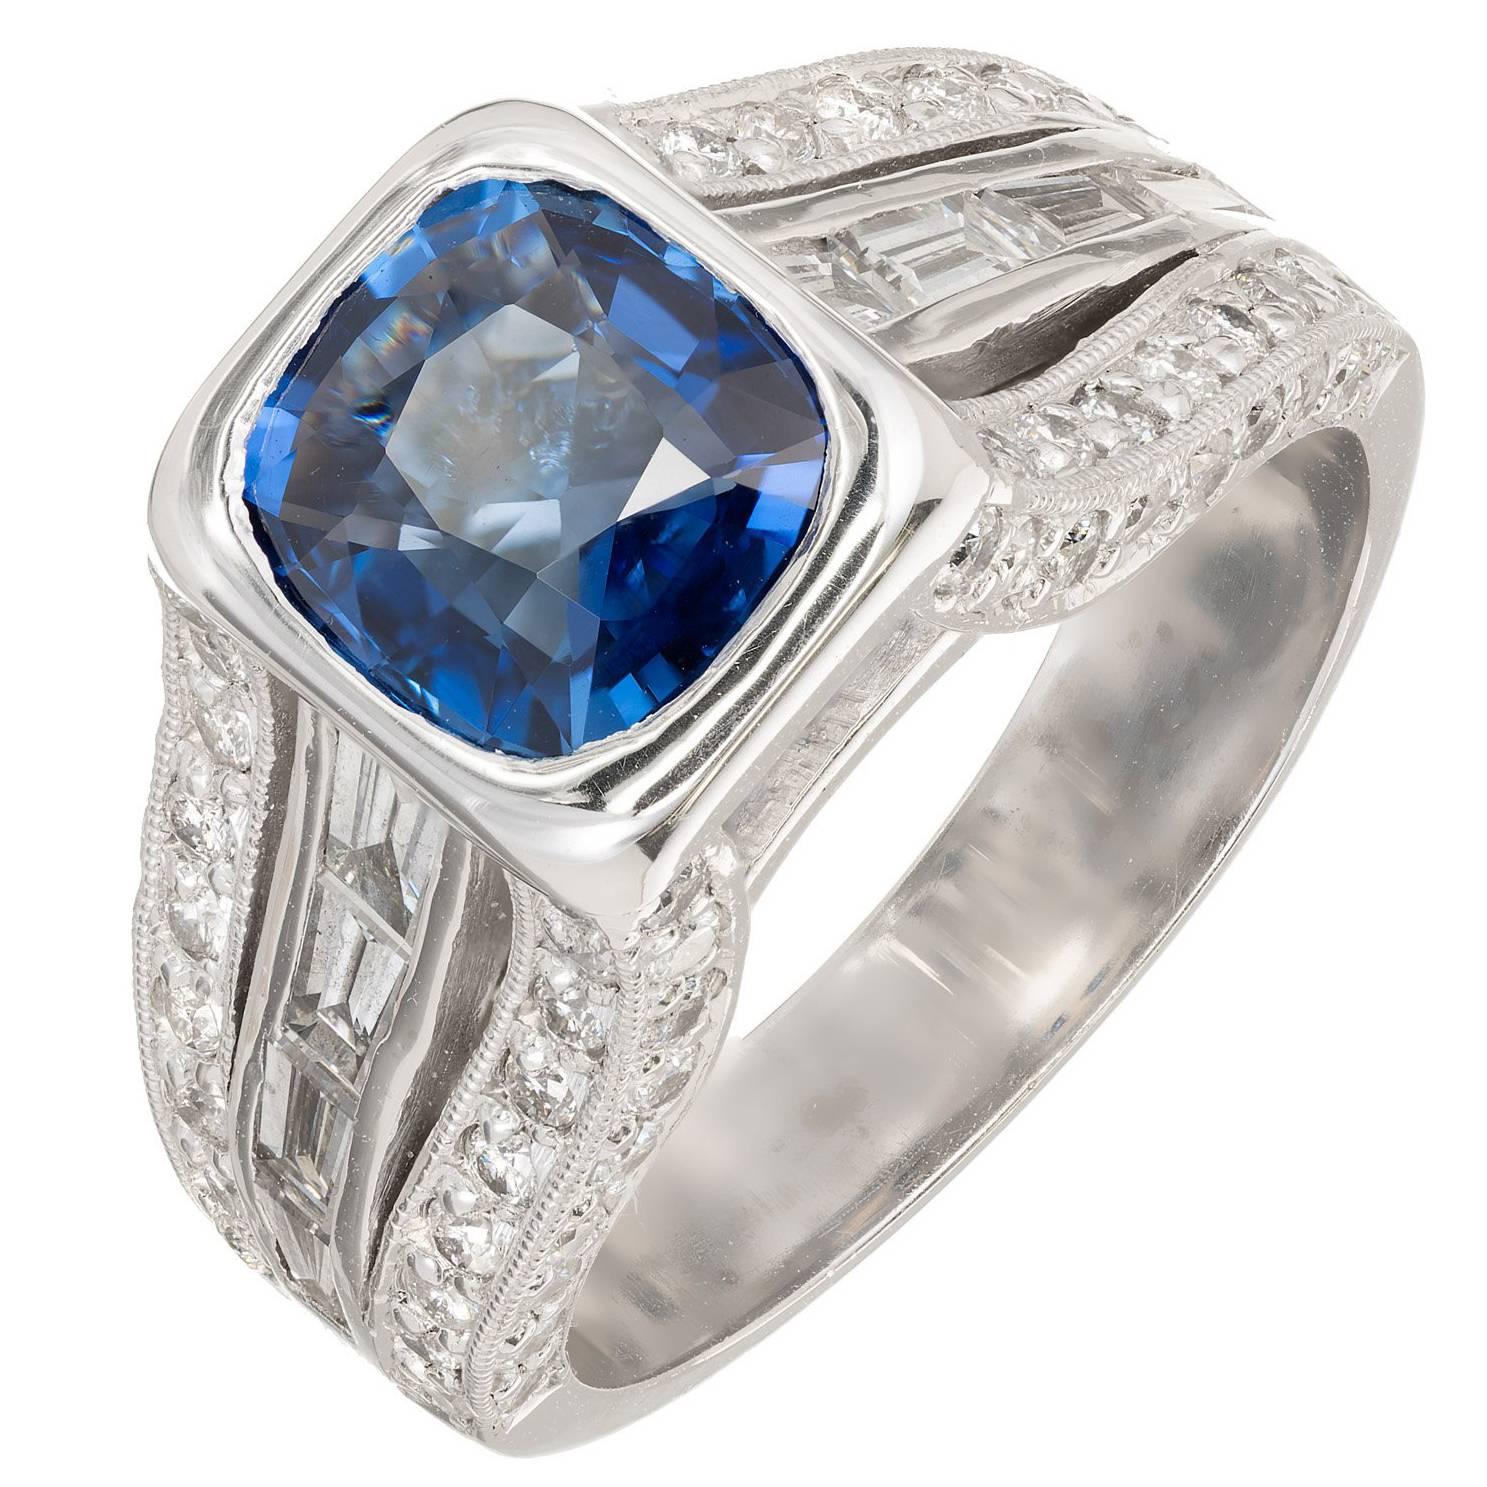 Peter Suchy 1.98 Carat Cushion Cut Sapphire Diamond Platinum Engagement Ring